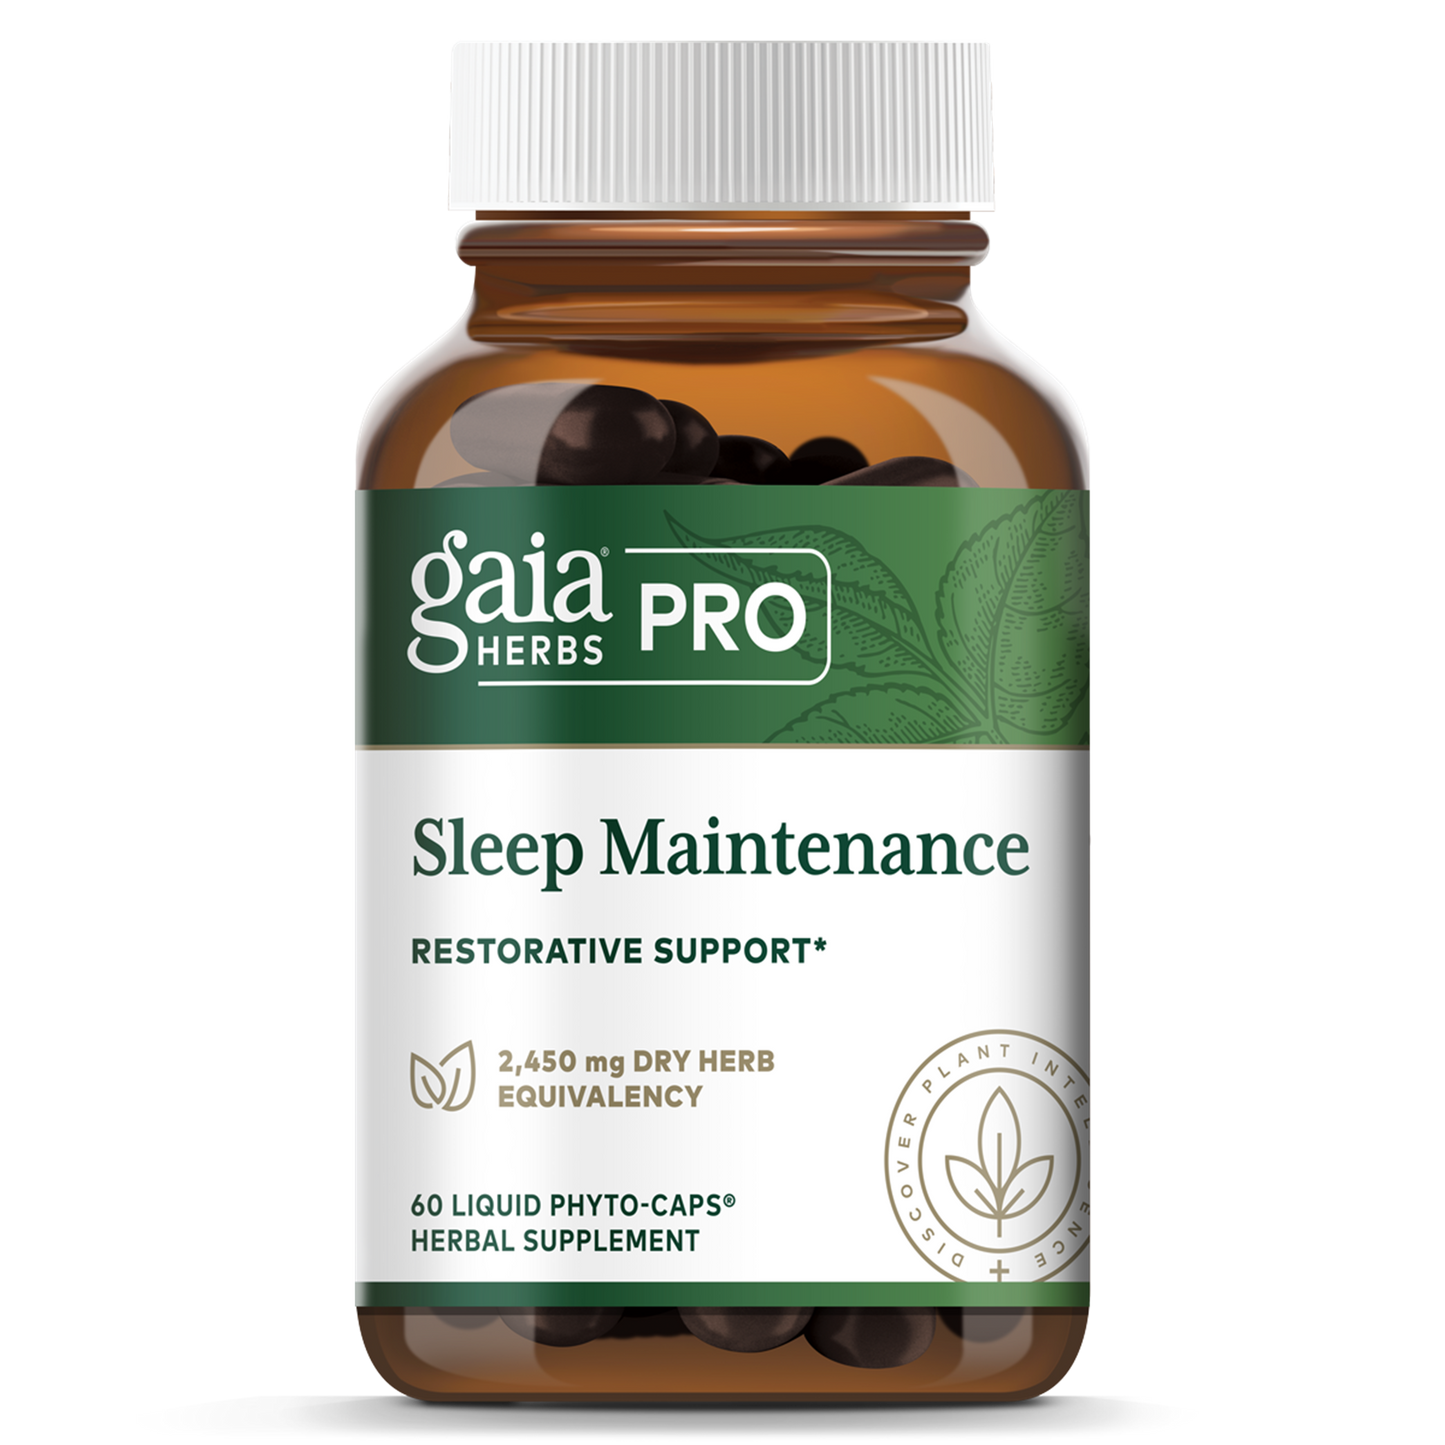 Sleep Maintenance